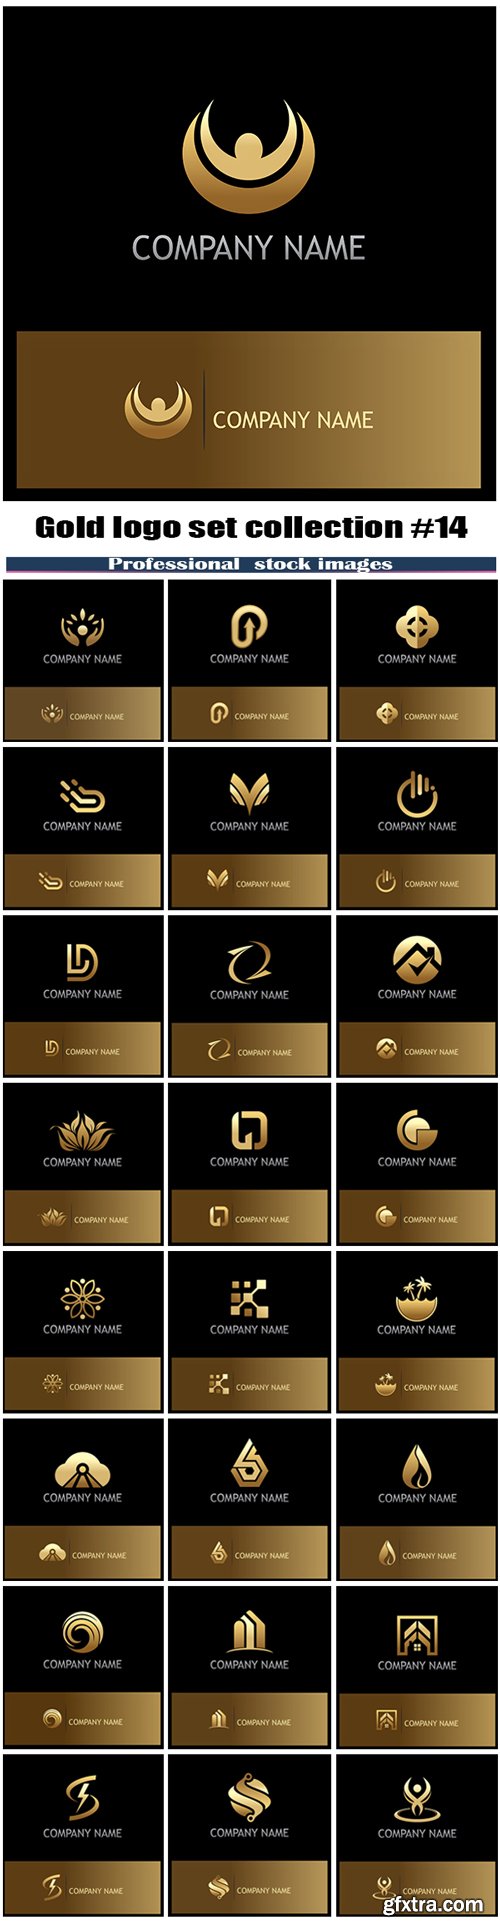 Gold logo set collection #14